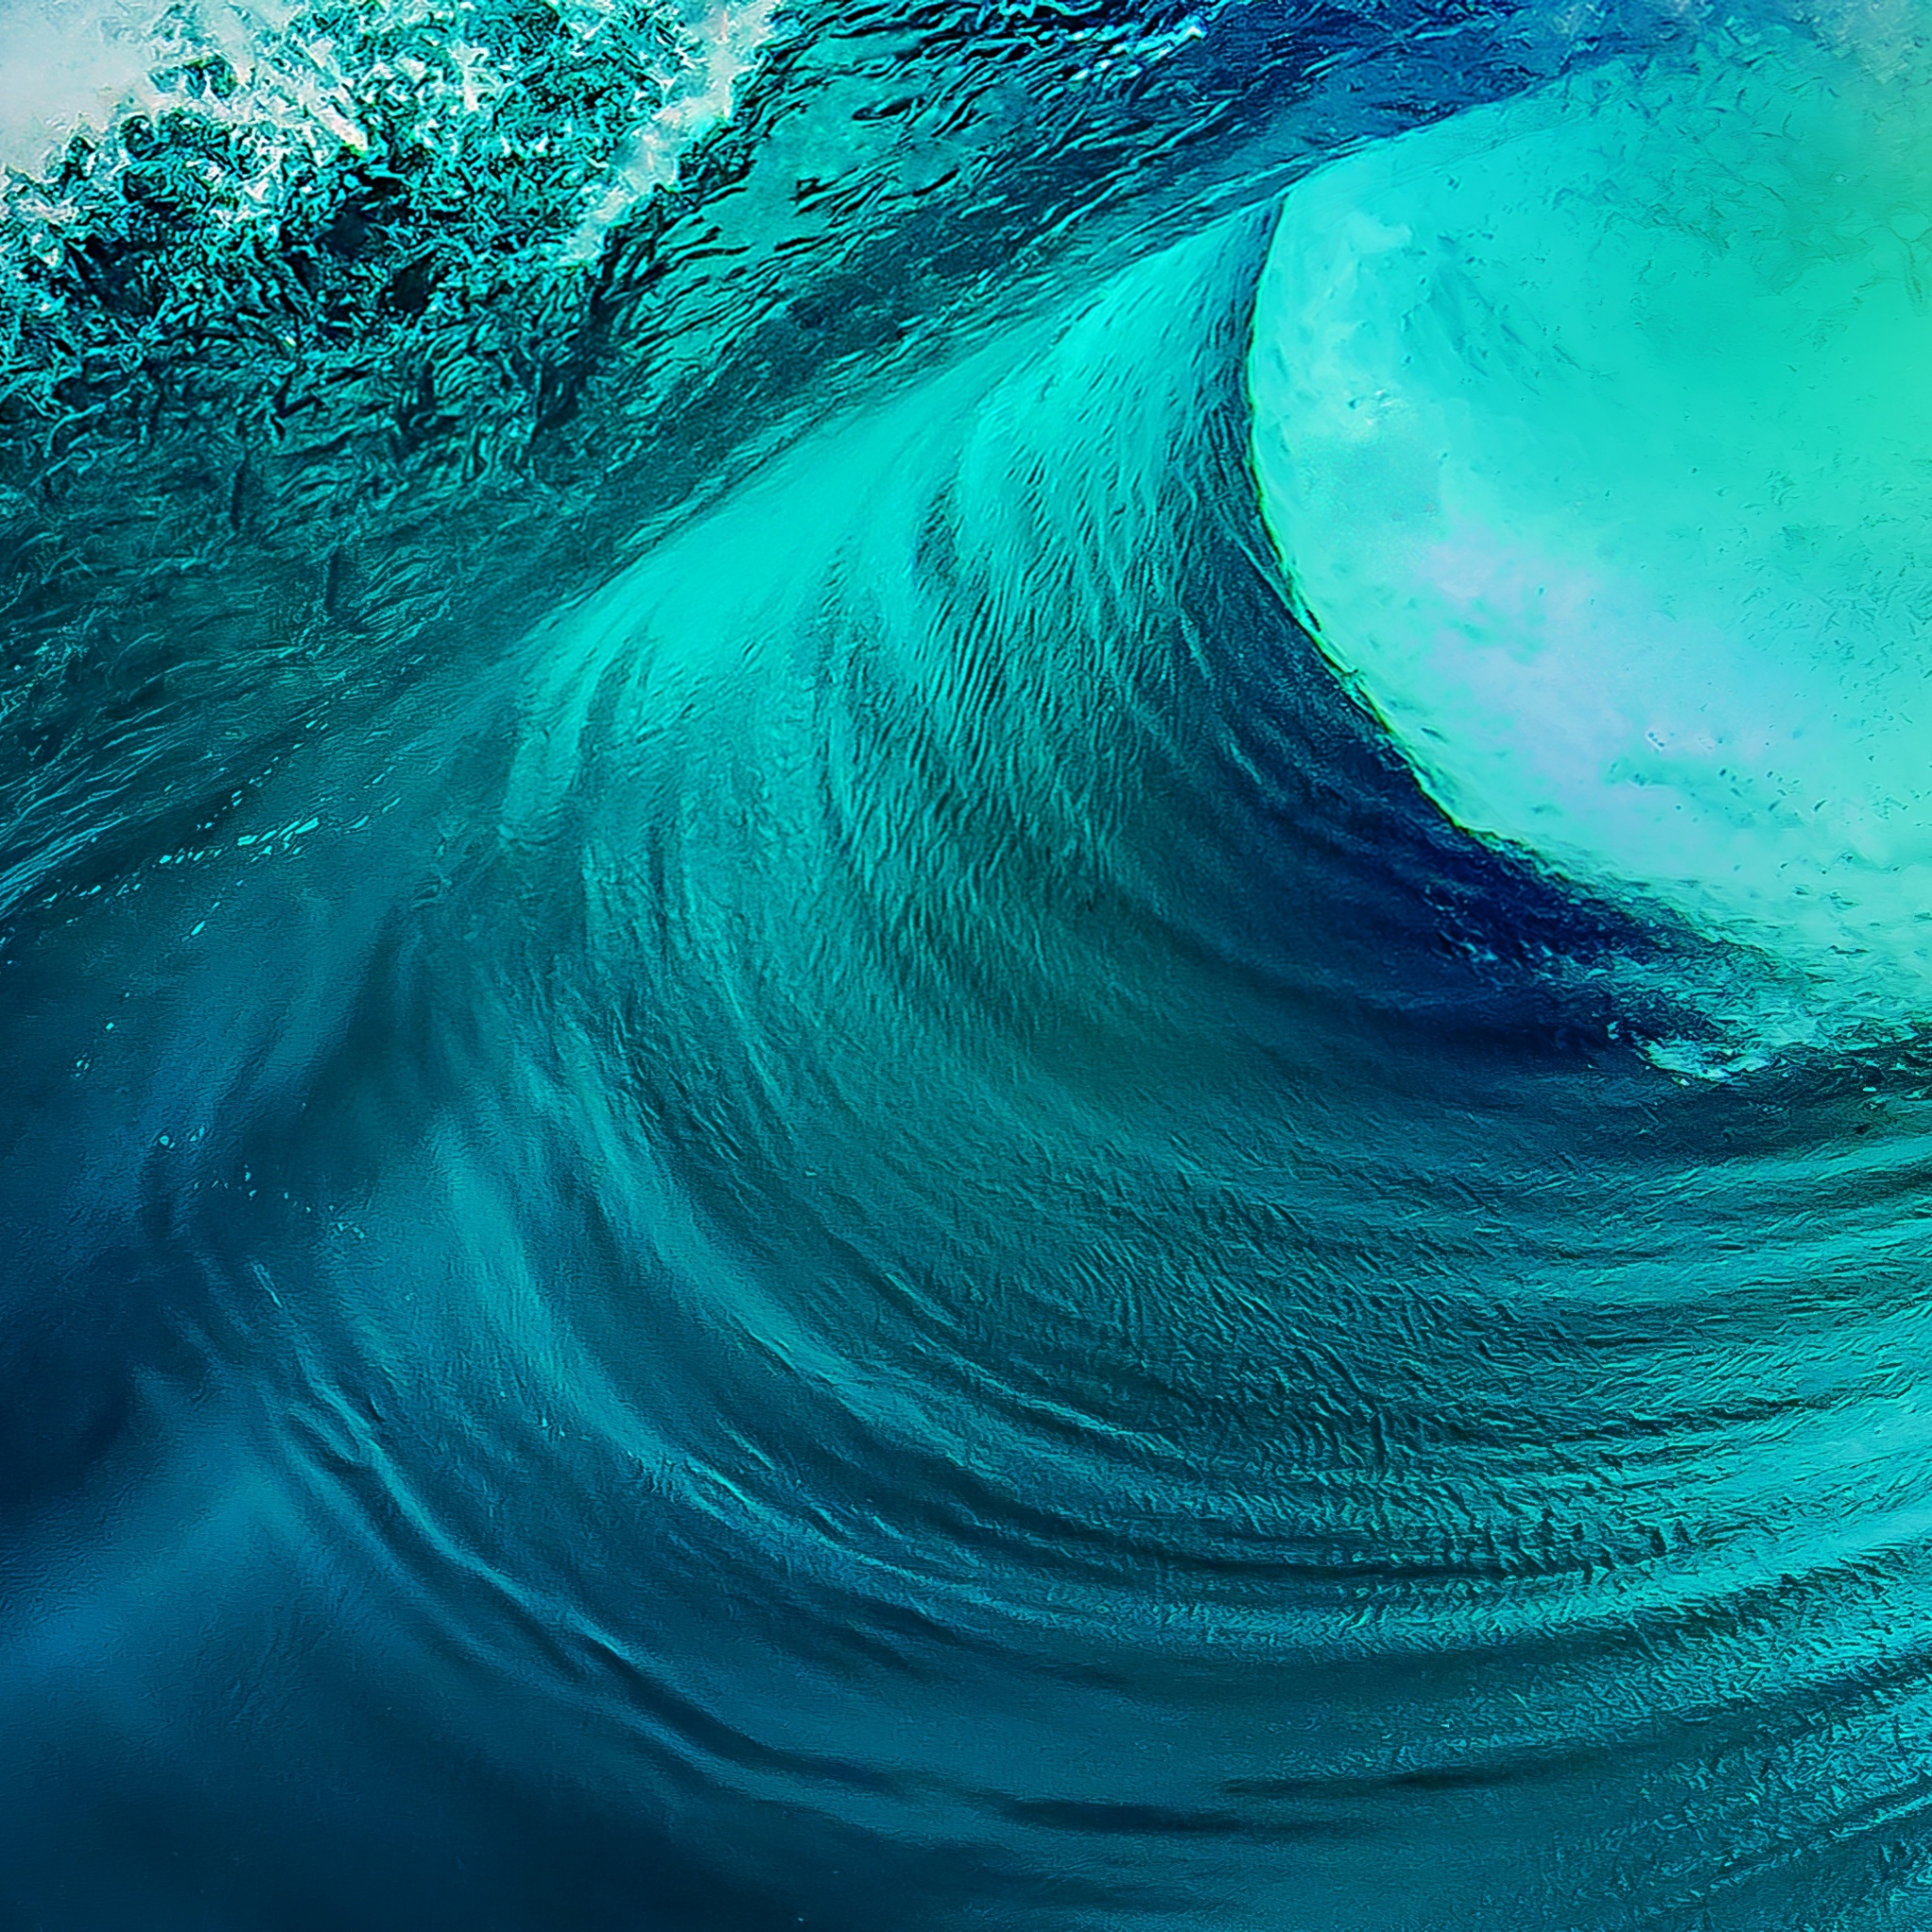 Ocean Waves Wallpaper 4K, Stock, Vivo NEX, Android 10